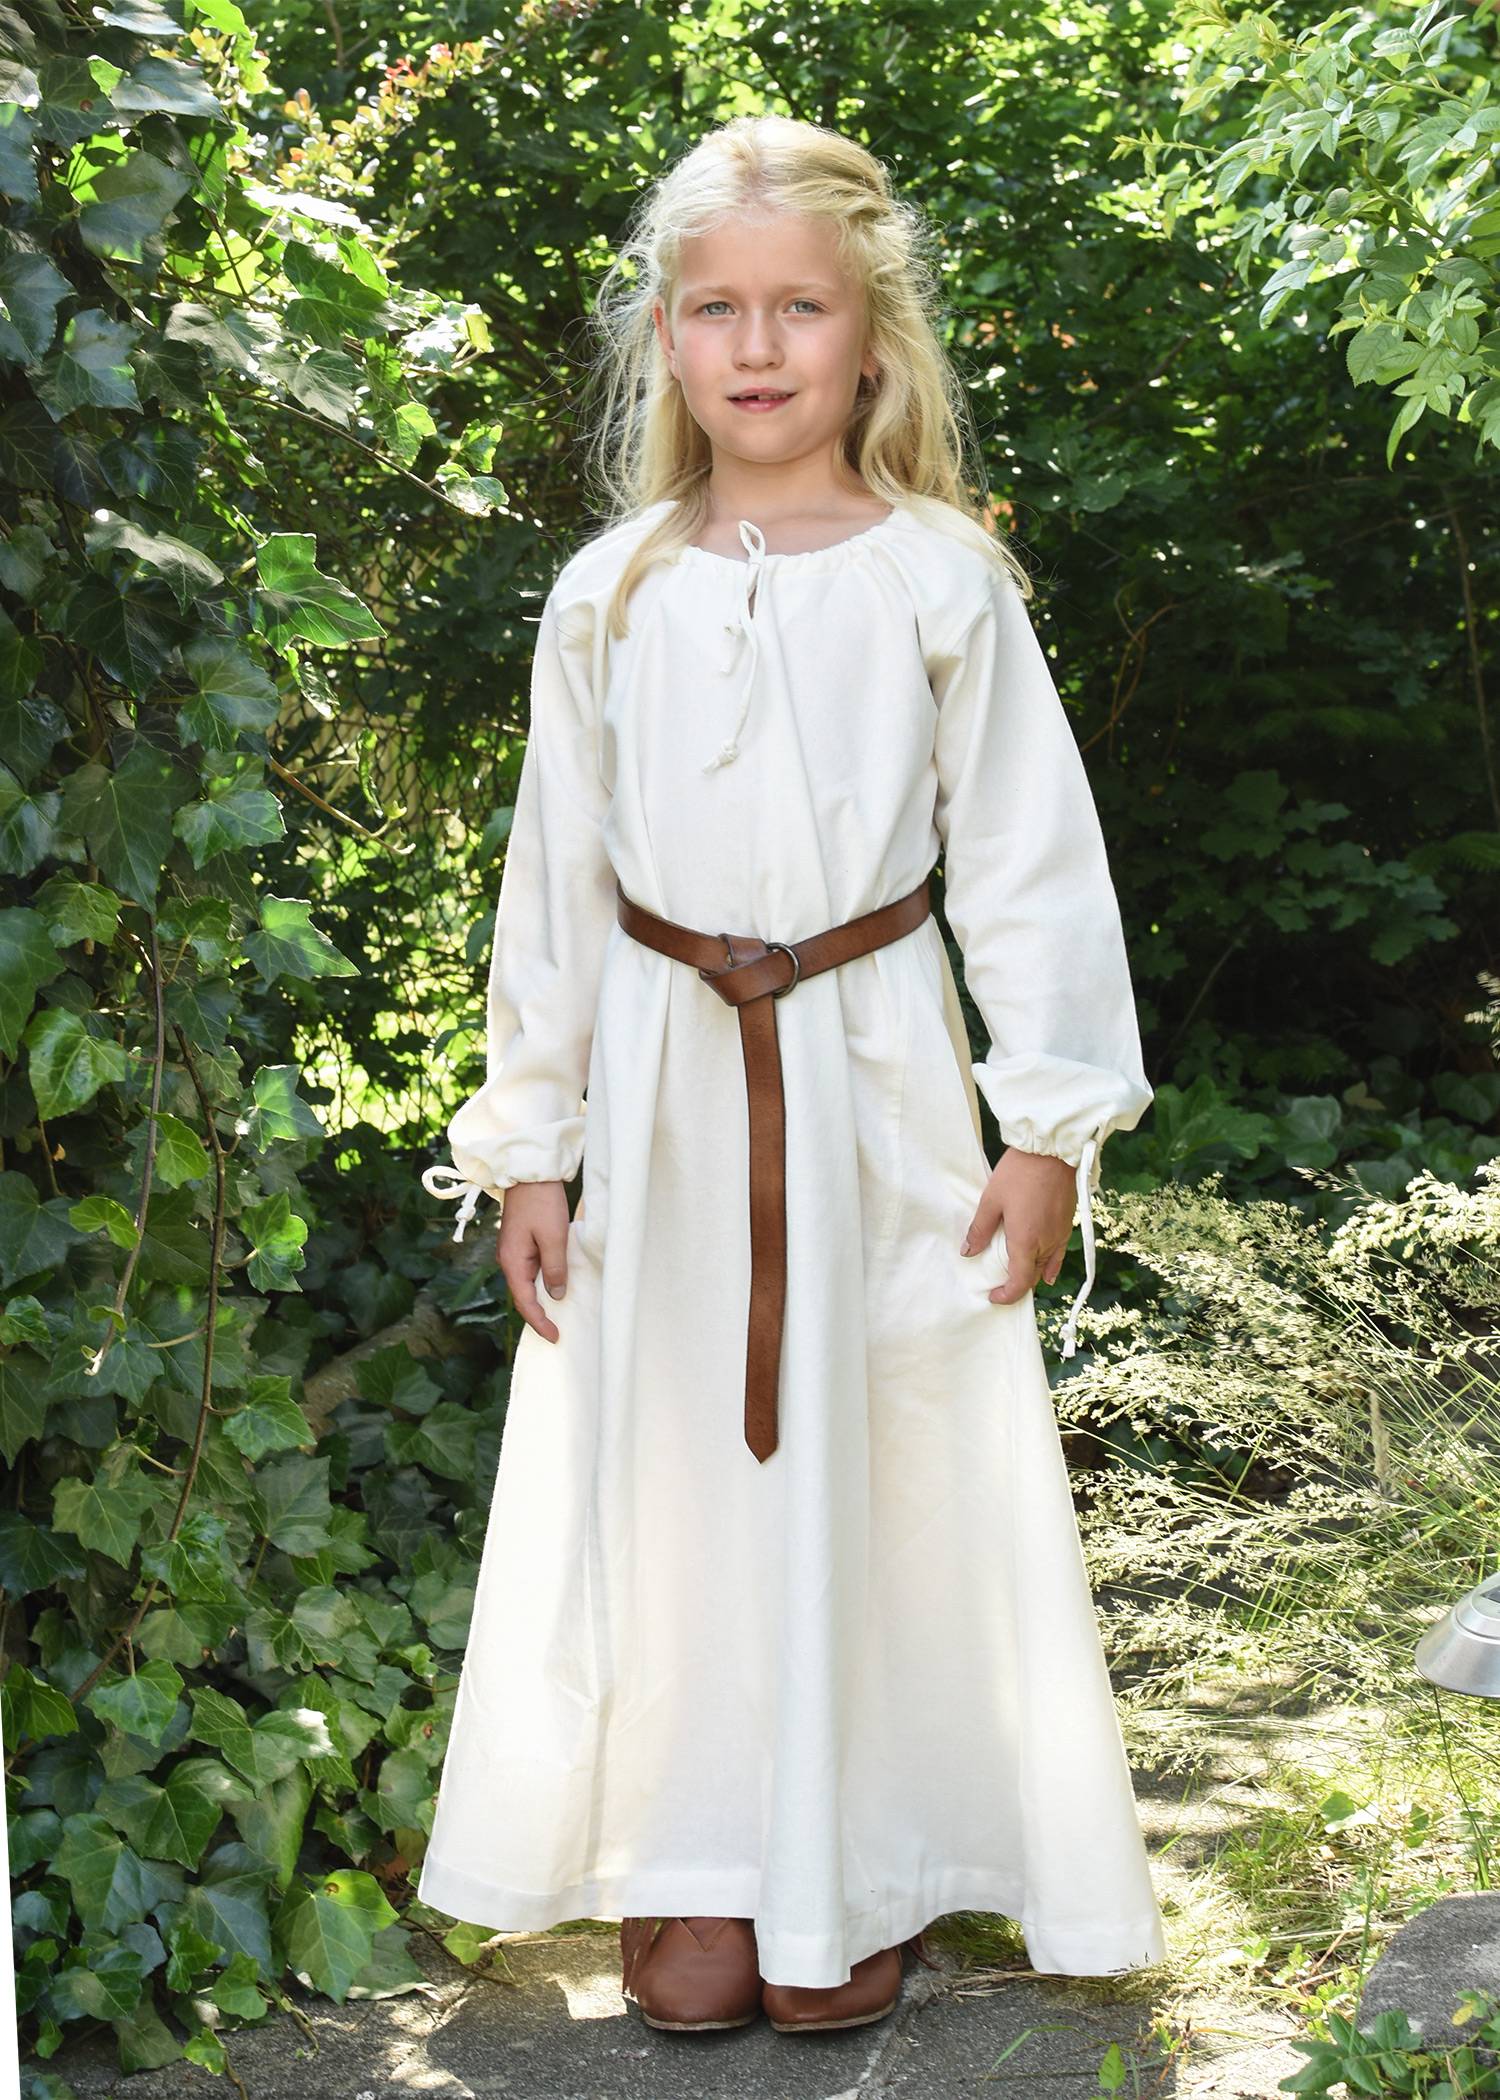 KINDER MITTELALTERKLEID Mädchen Mittelalter Kleid Kinderkleid BAUMWOLLE 4 Farben 